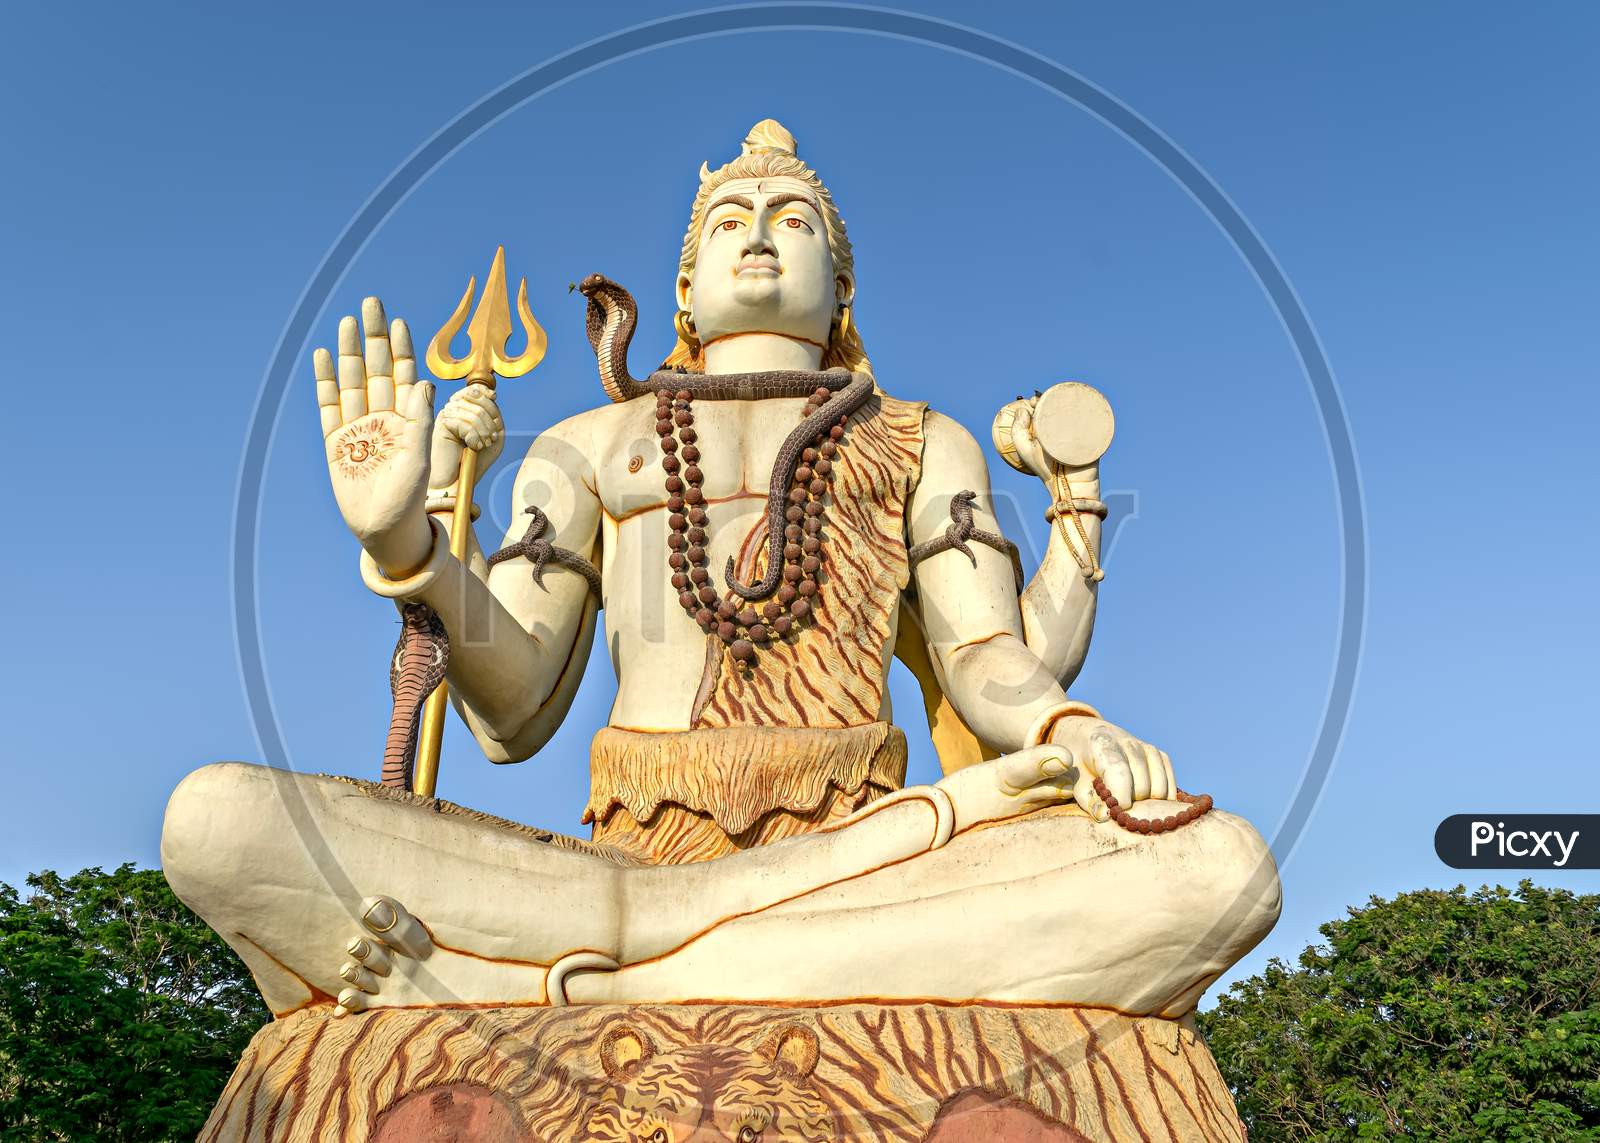 82 Feet Tall Statue Of Hindu God , Lord Shiva, Nageshwar Temple, Dwarka, India.